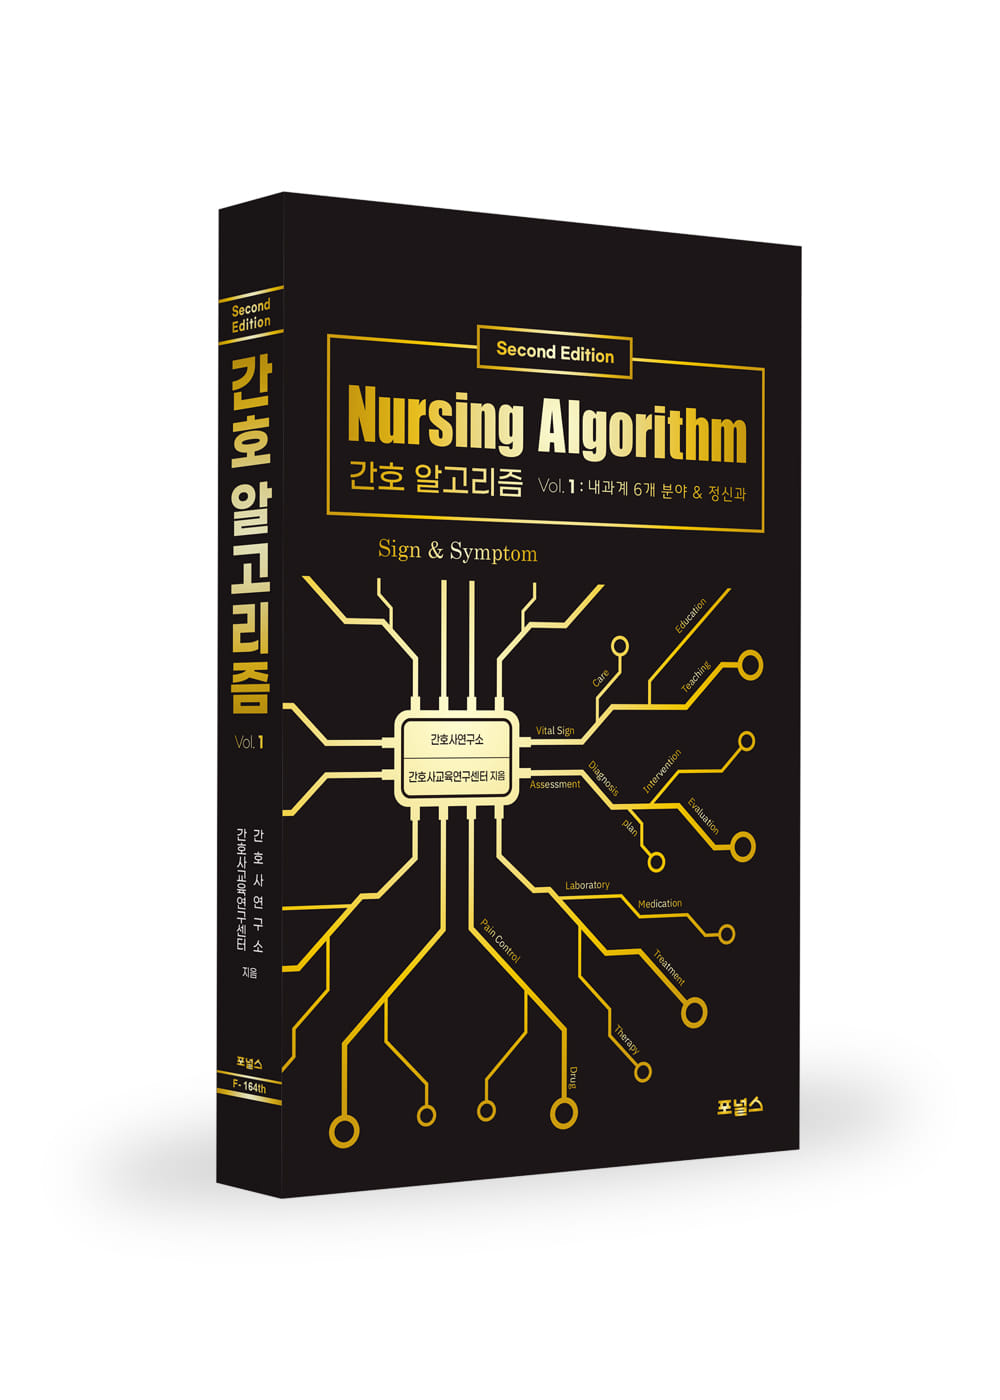 Nursing Algorithms vol.1